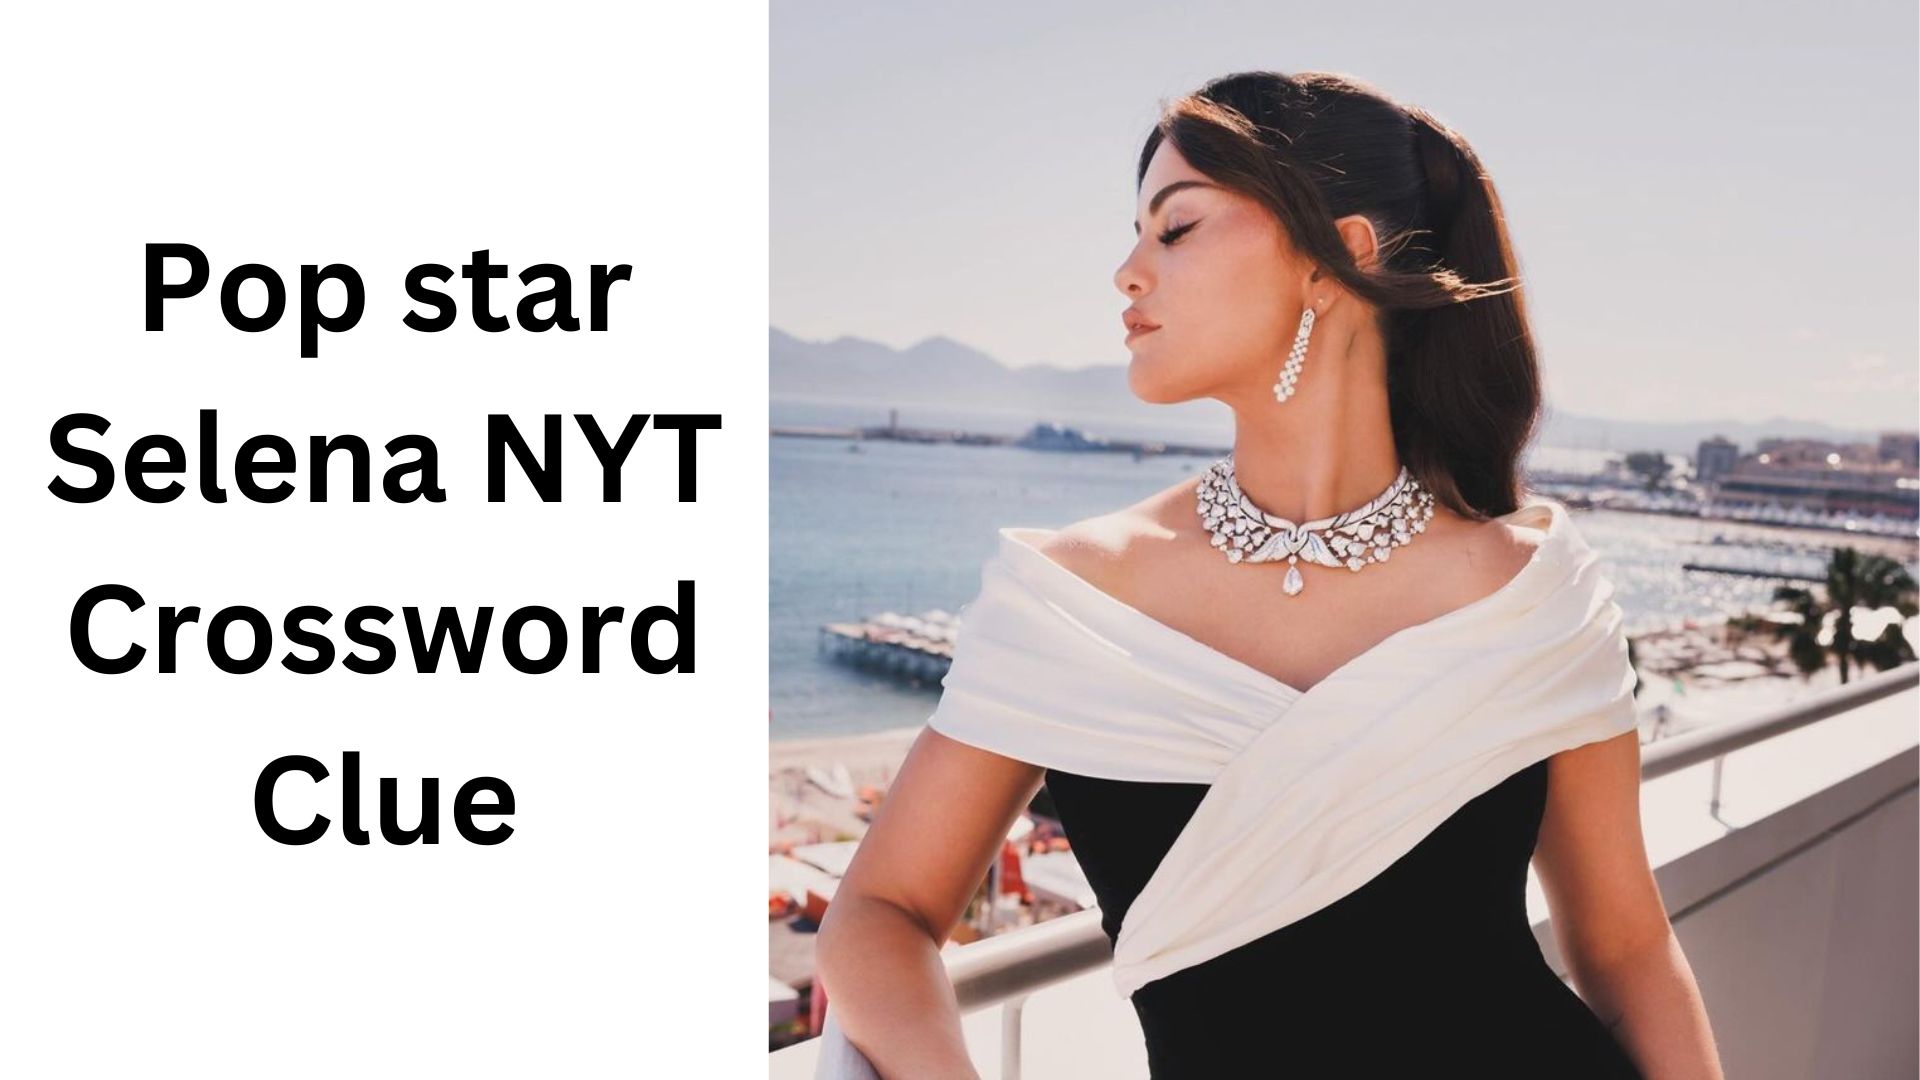 Pop star Selena NYT Crossword Clue